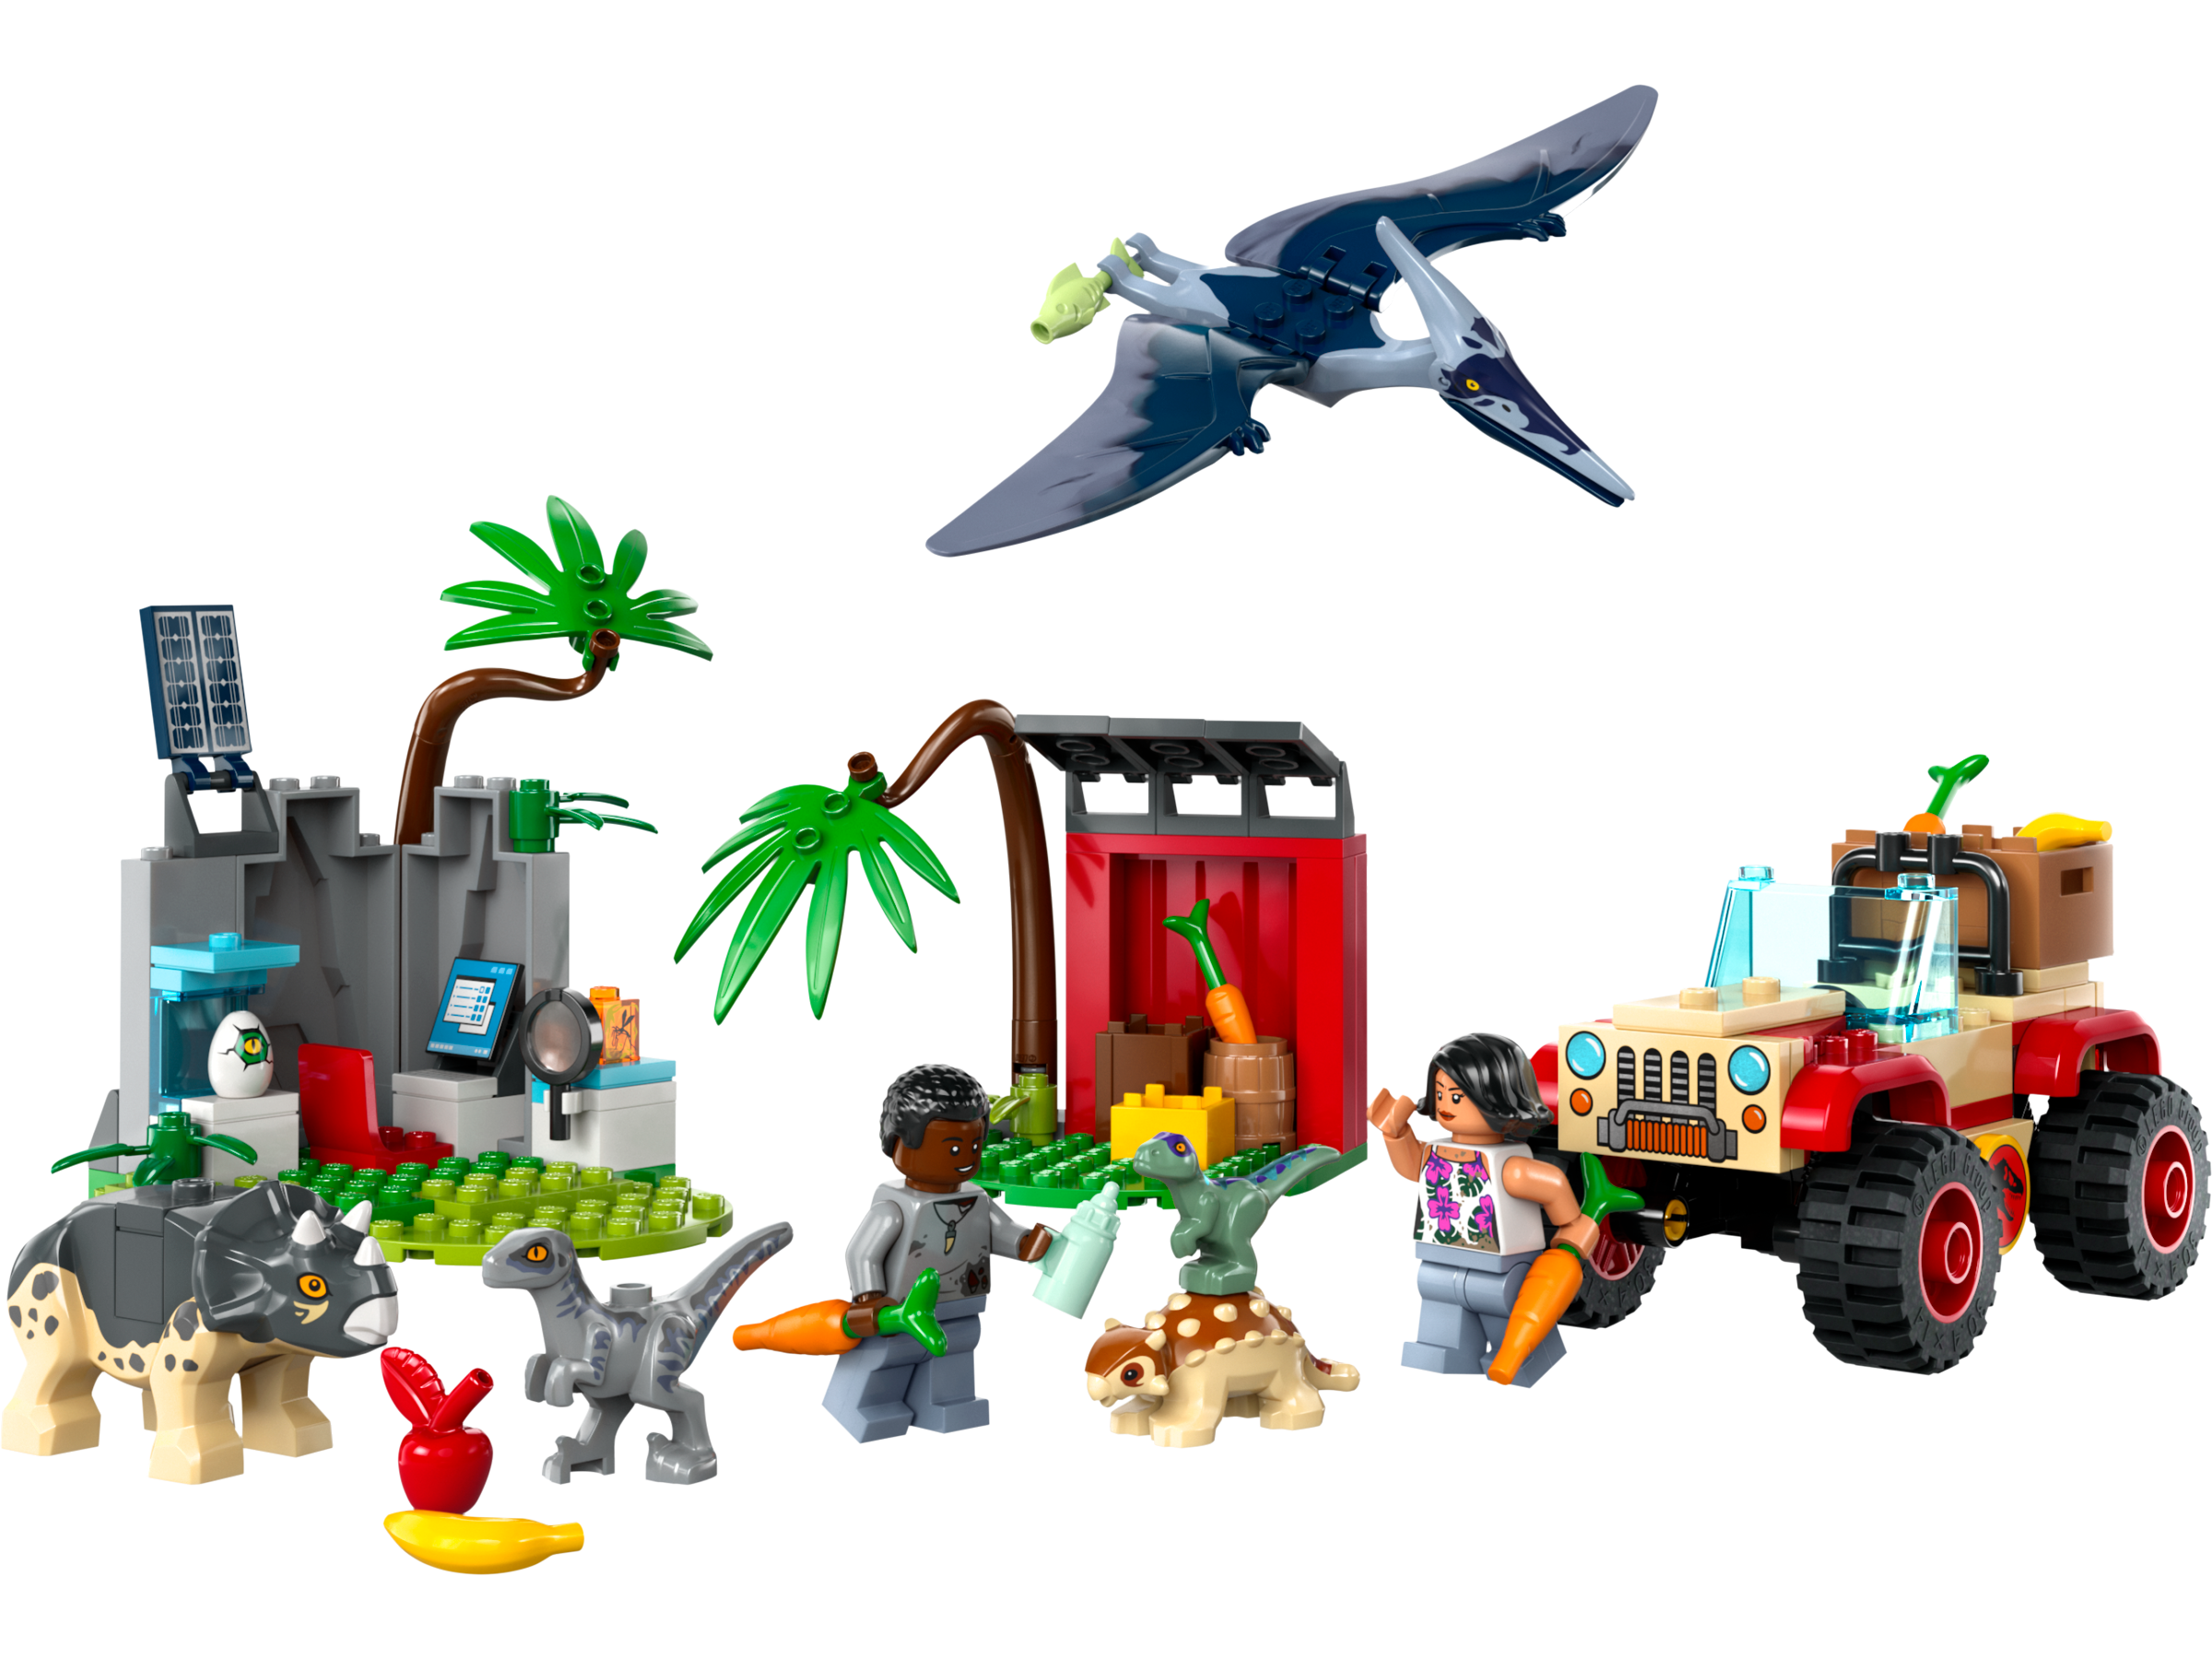 Lego Jurassic World - Descoberta do Braquiossauro - 76960